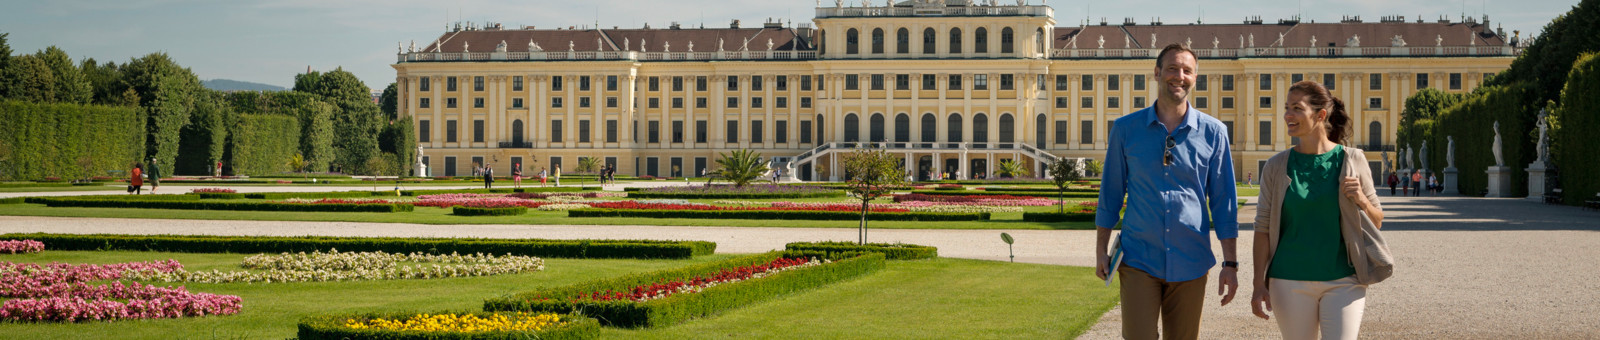     Schönbrunn Palace / Vienna